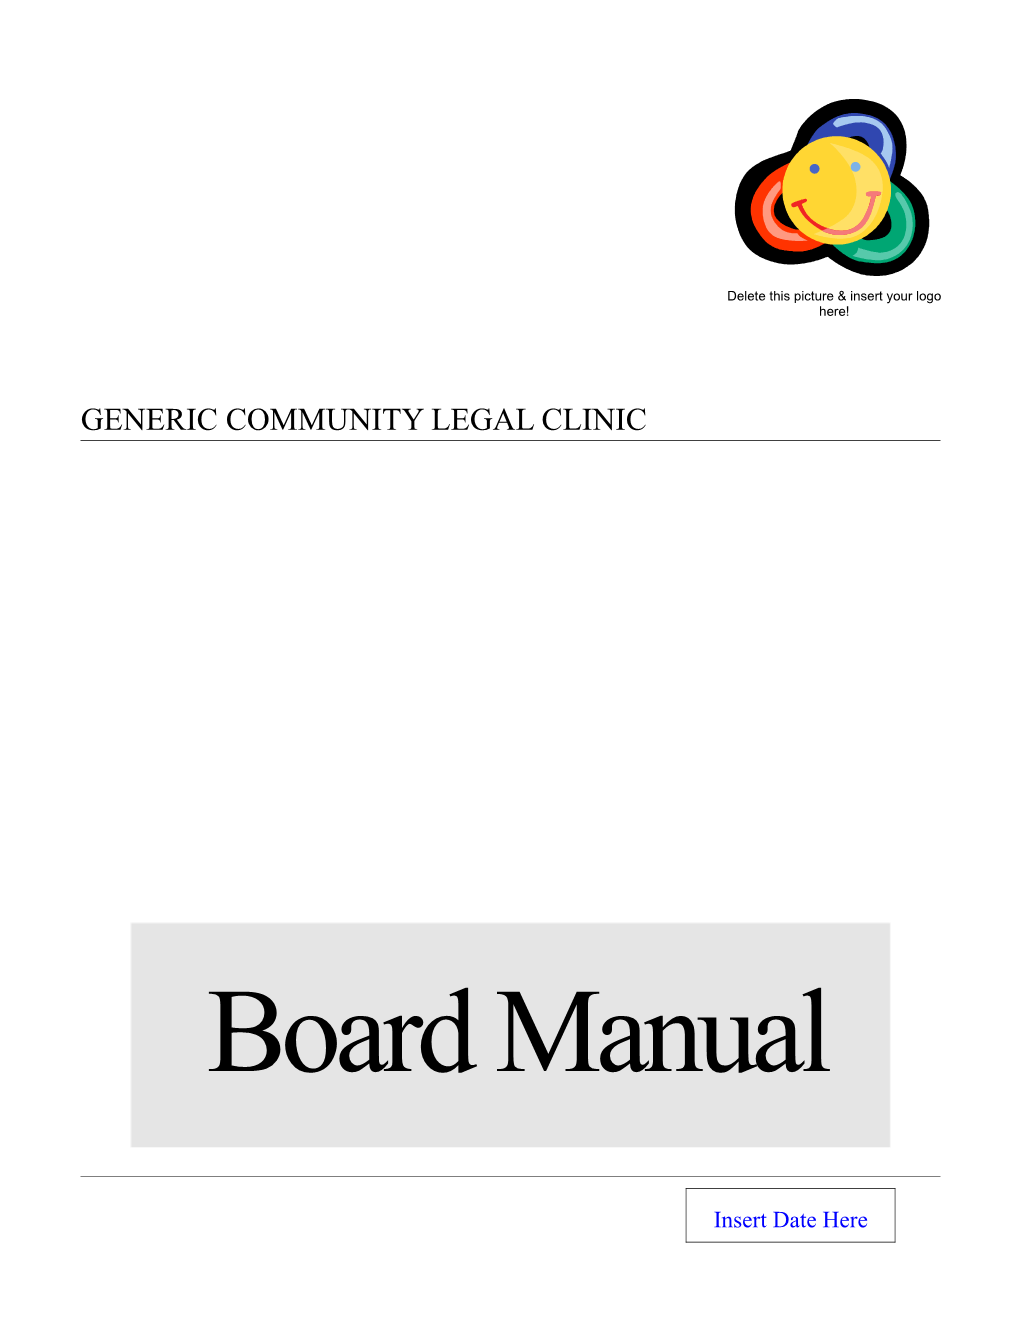 Generic COMMUNITY Legal Clinic